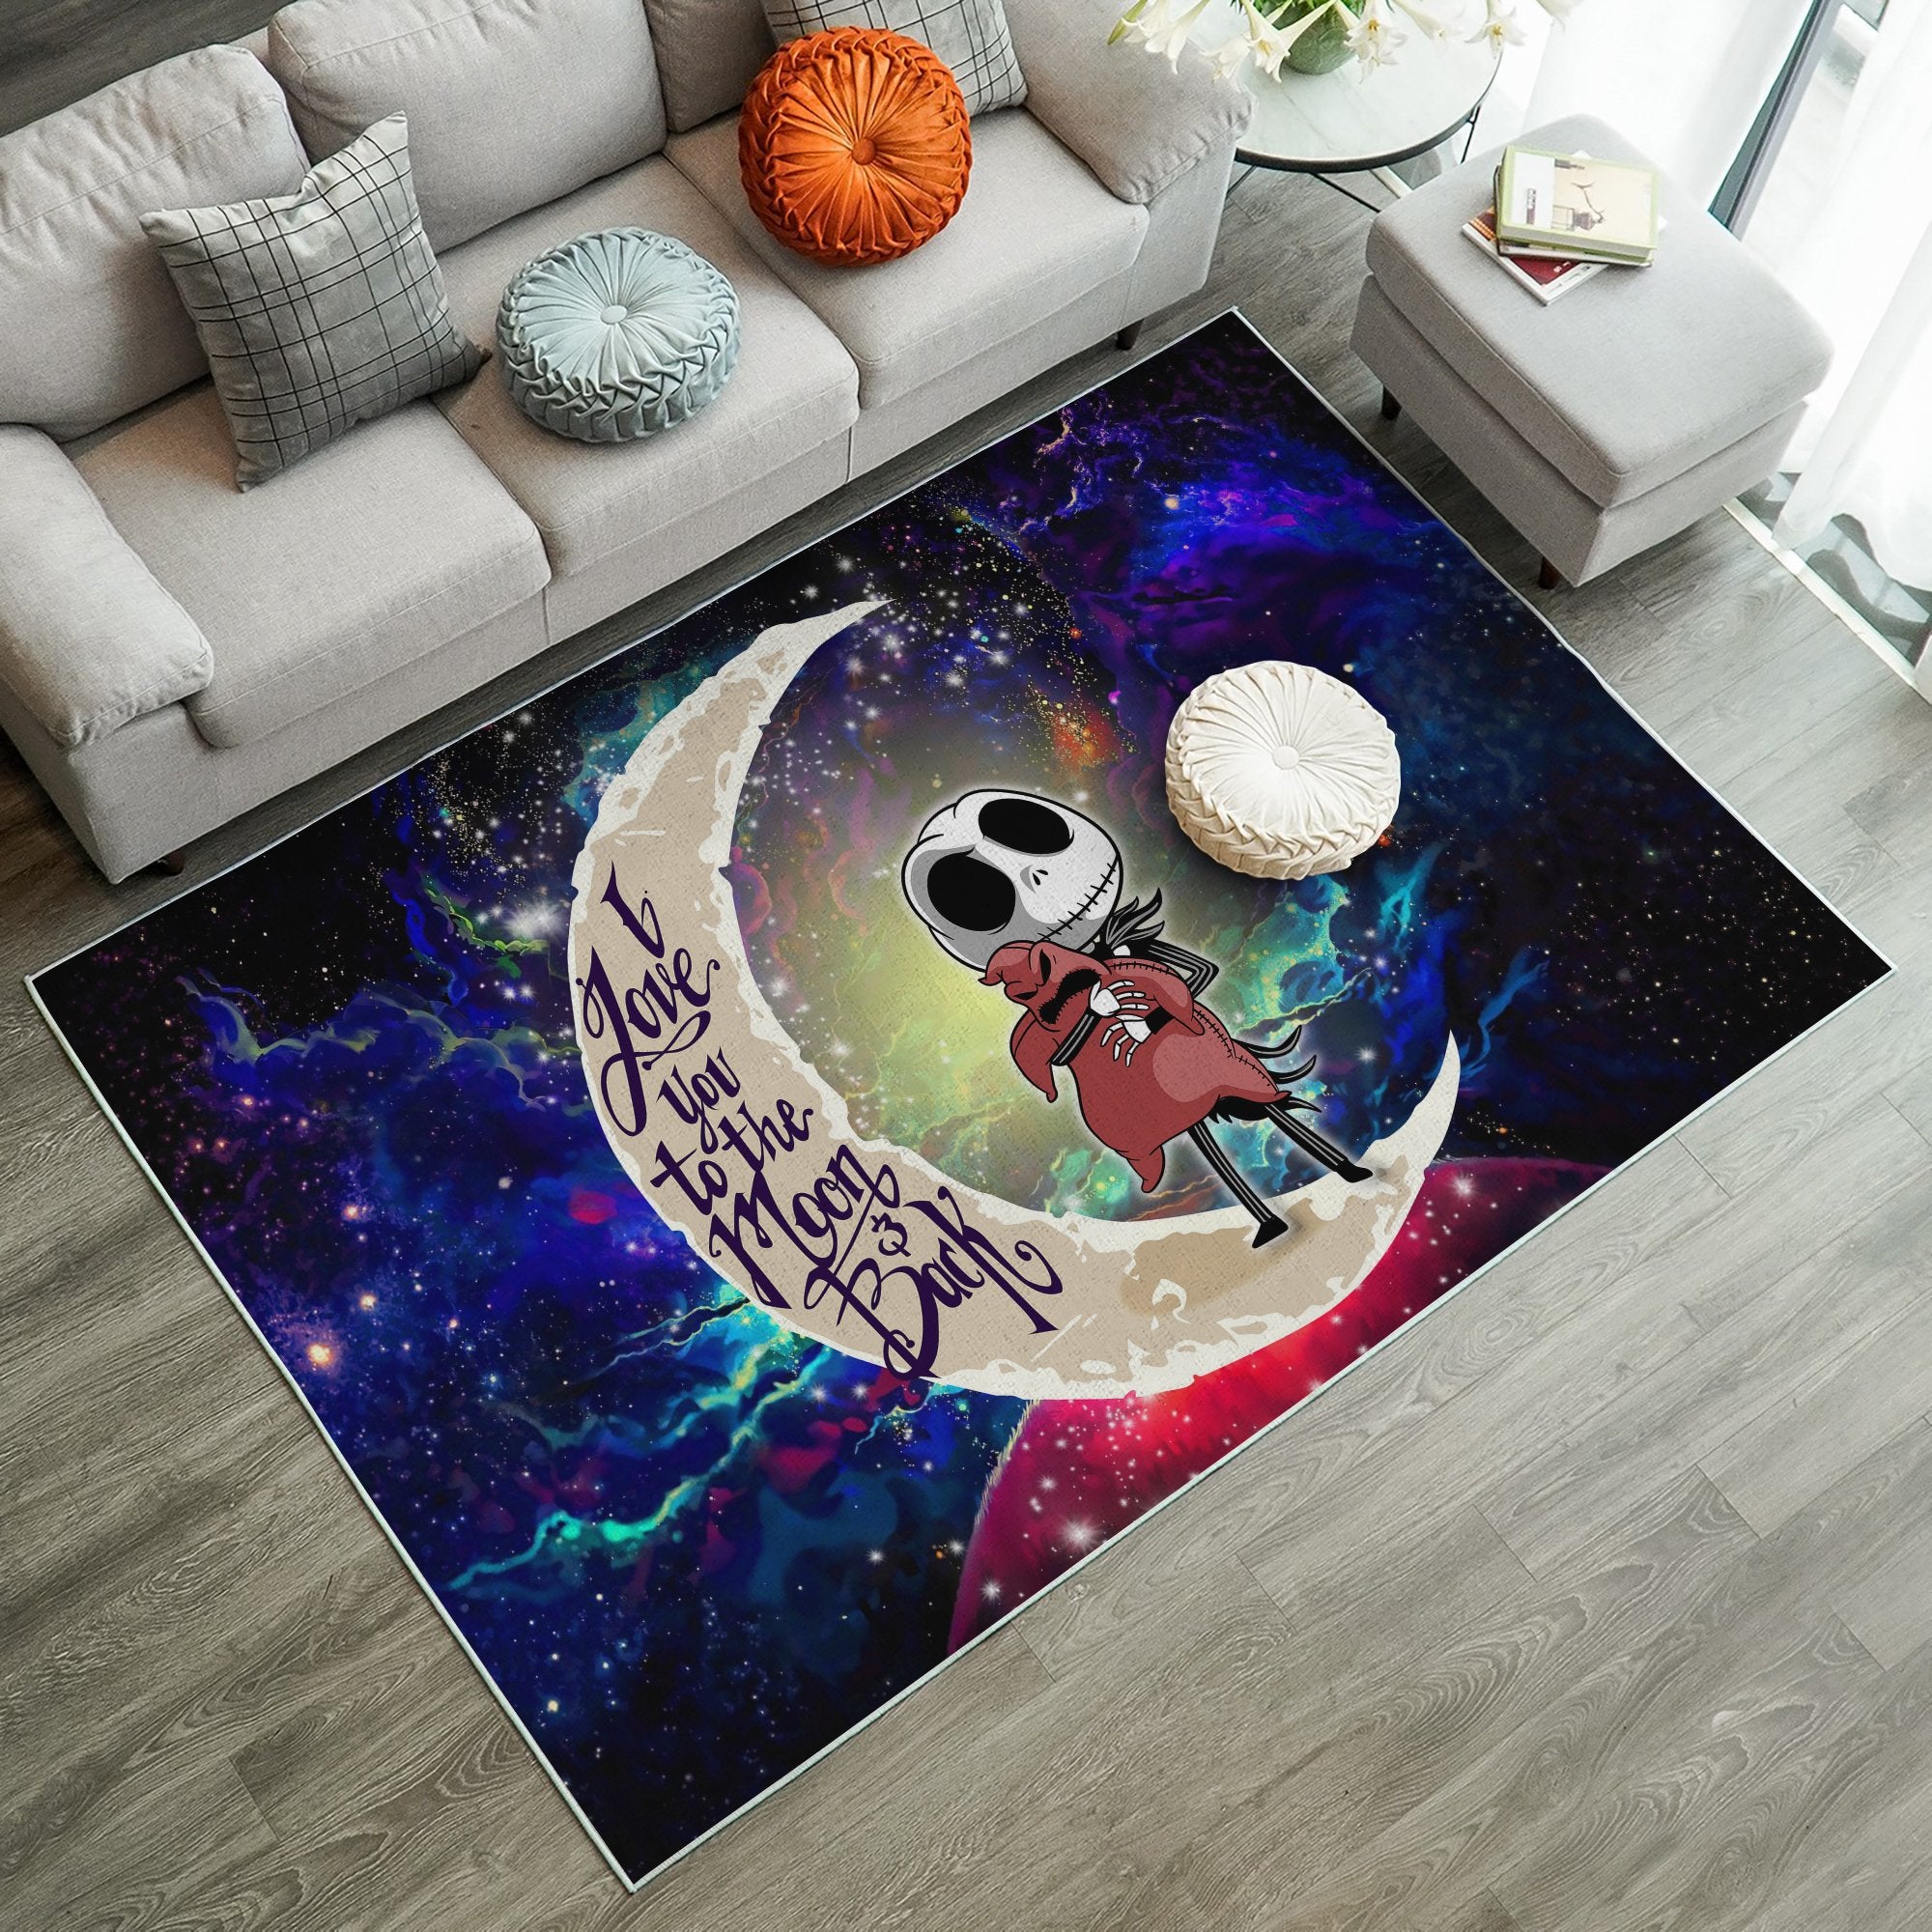 Jack Skellington Nightmare Before Christmas Love You To The Moon Galaxy Carpet Rug Home Room Decor Nearkii